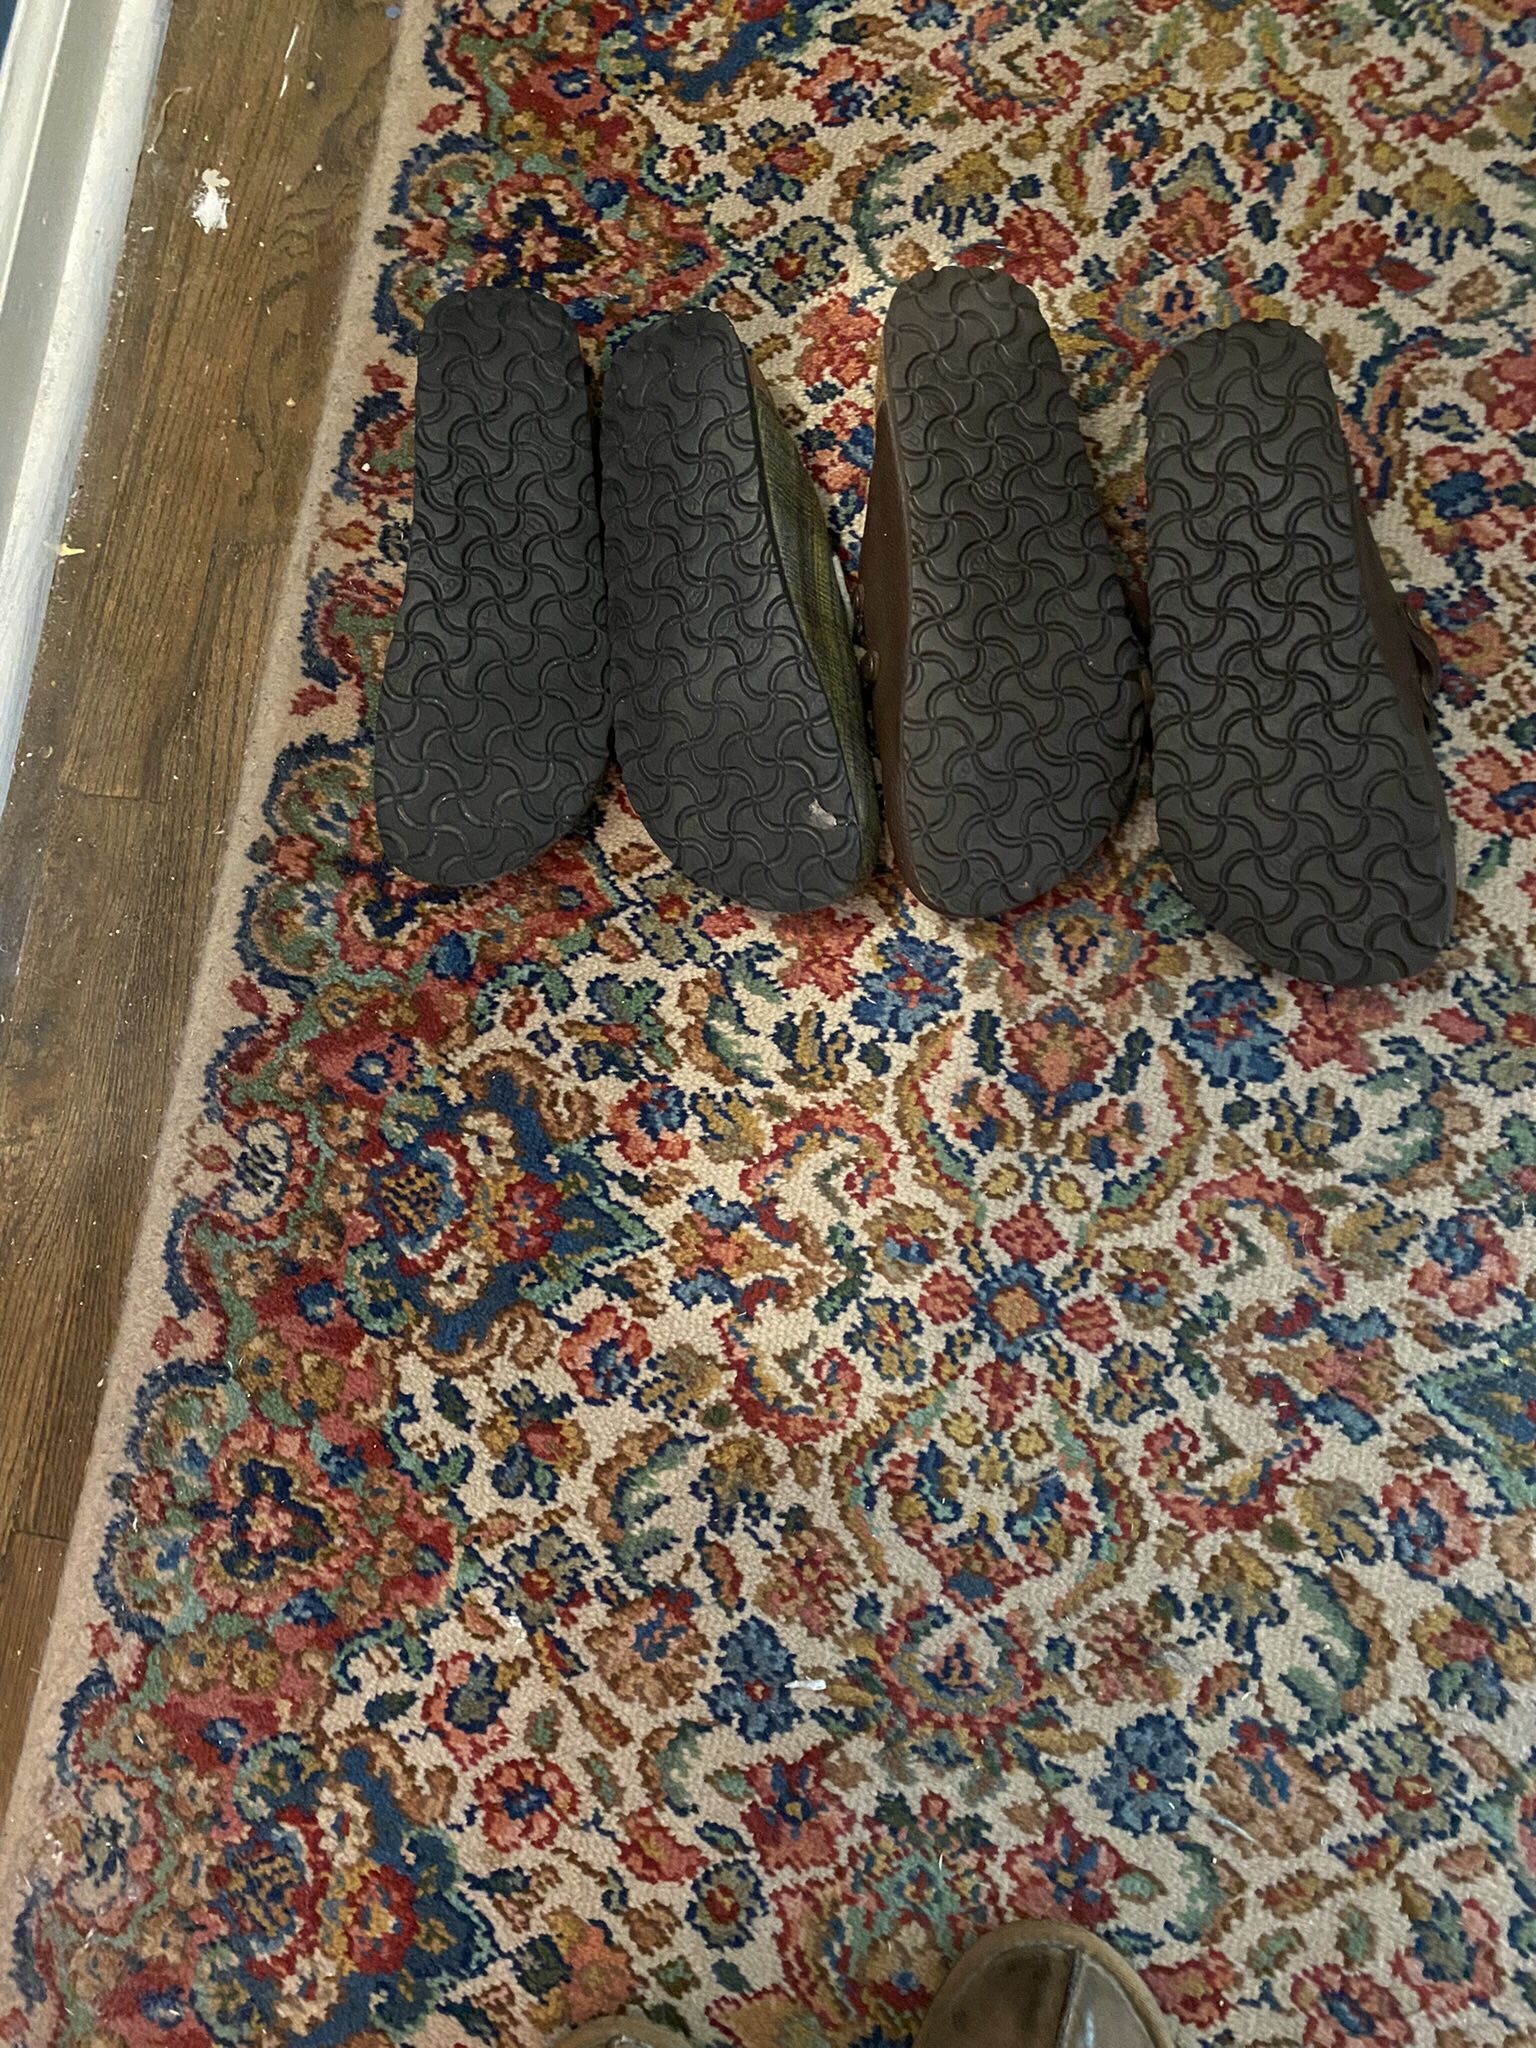 Ladies Size 7 Birkenstock Clogs/Sandals for Sale in Suffolk, VA